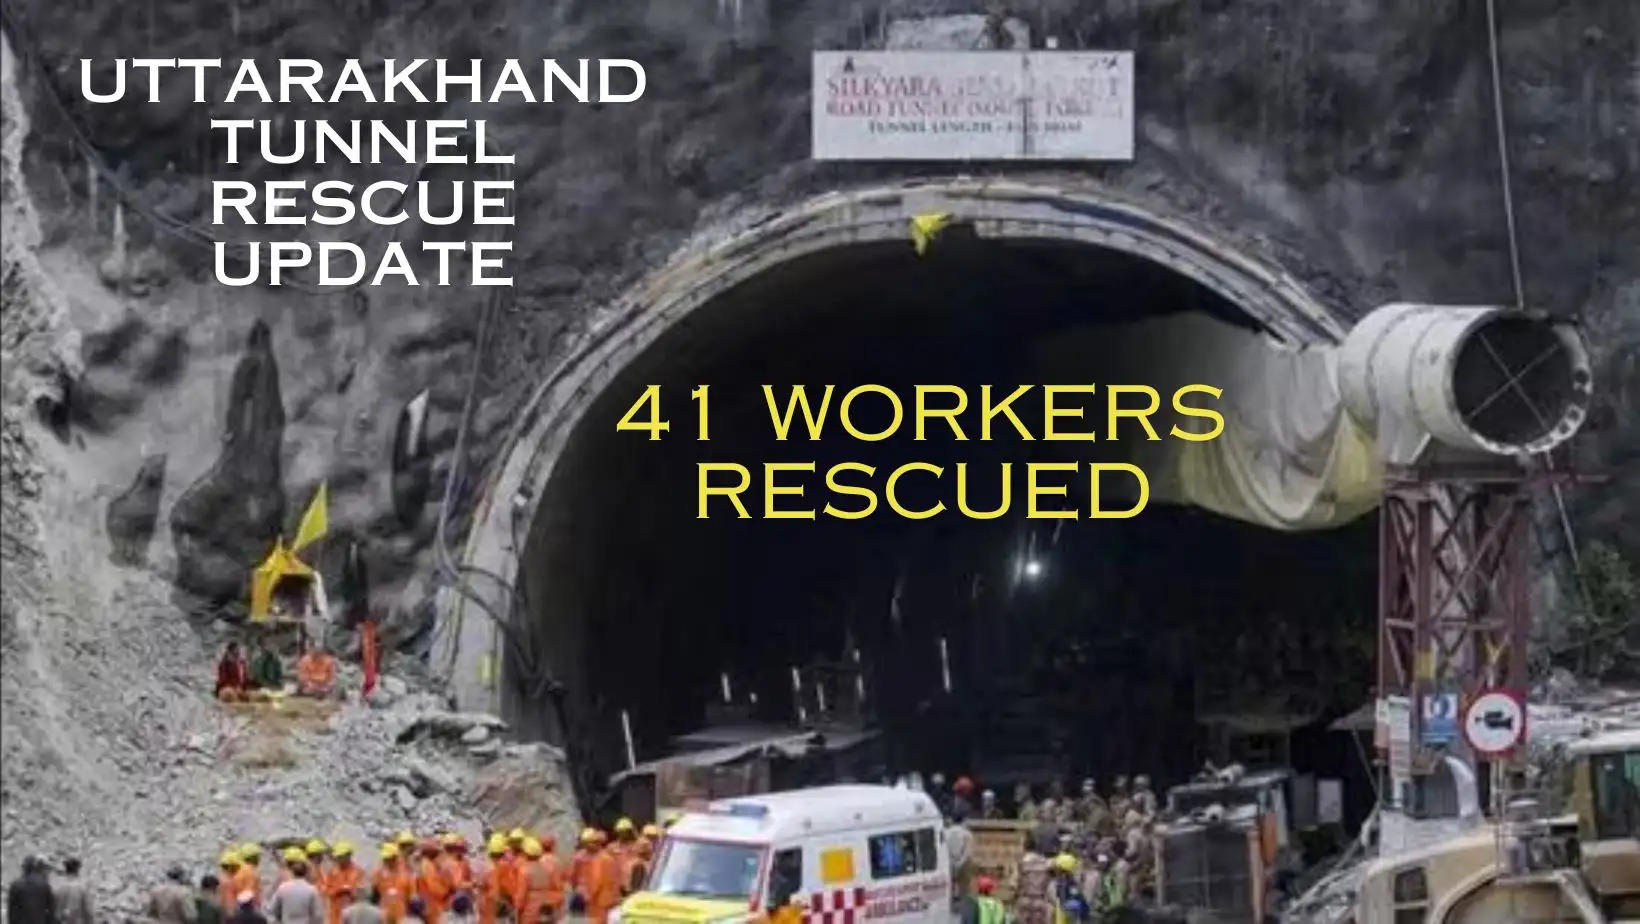 SIlkyara Uttarakhand Tunnel Rescue LIVE UPDATE 41 Workers Rescued Taken to Hospital